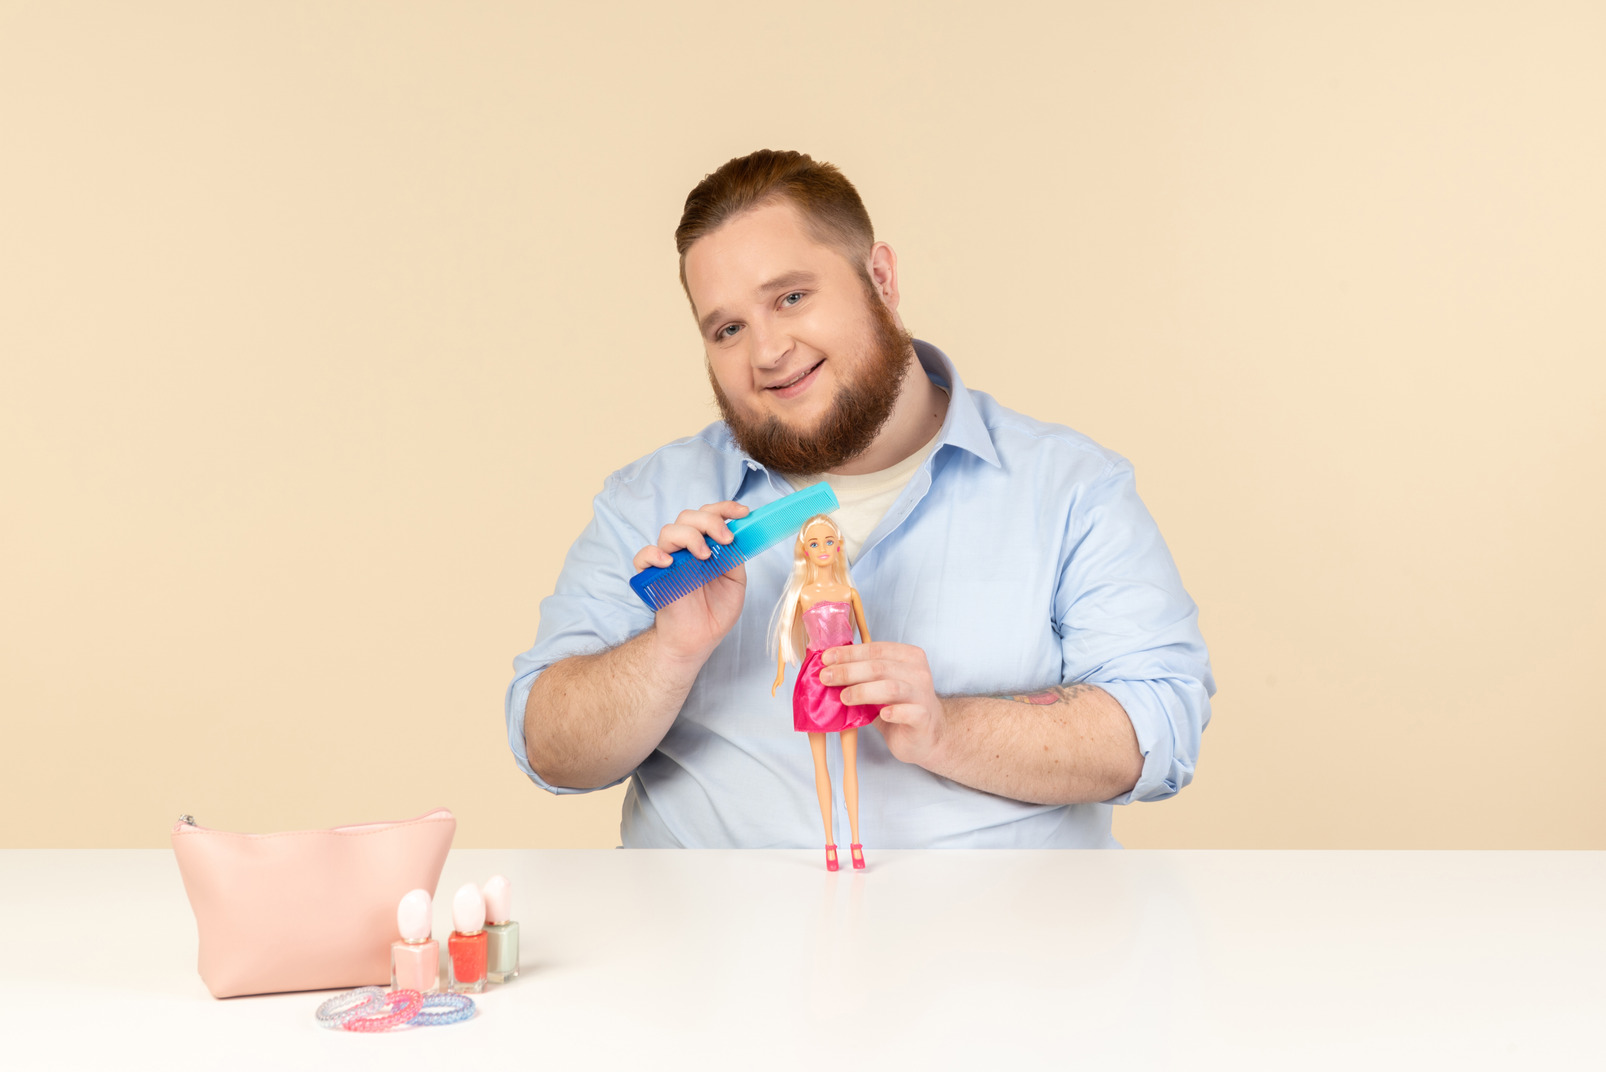 Big man holding hair brush and barbie doll